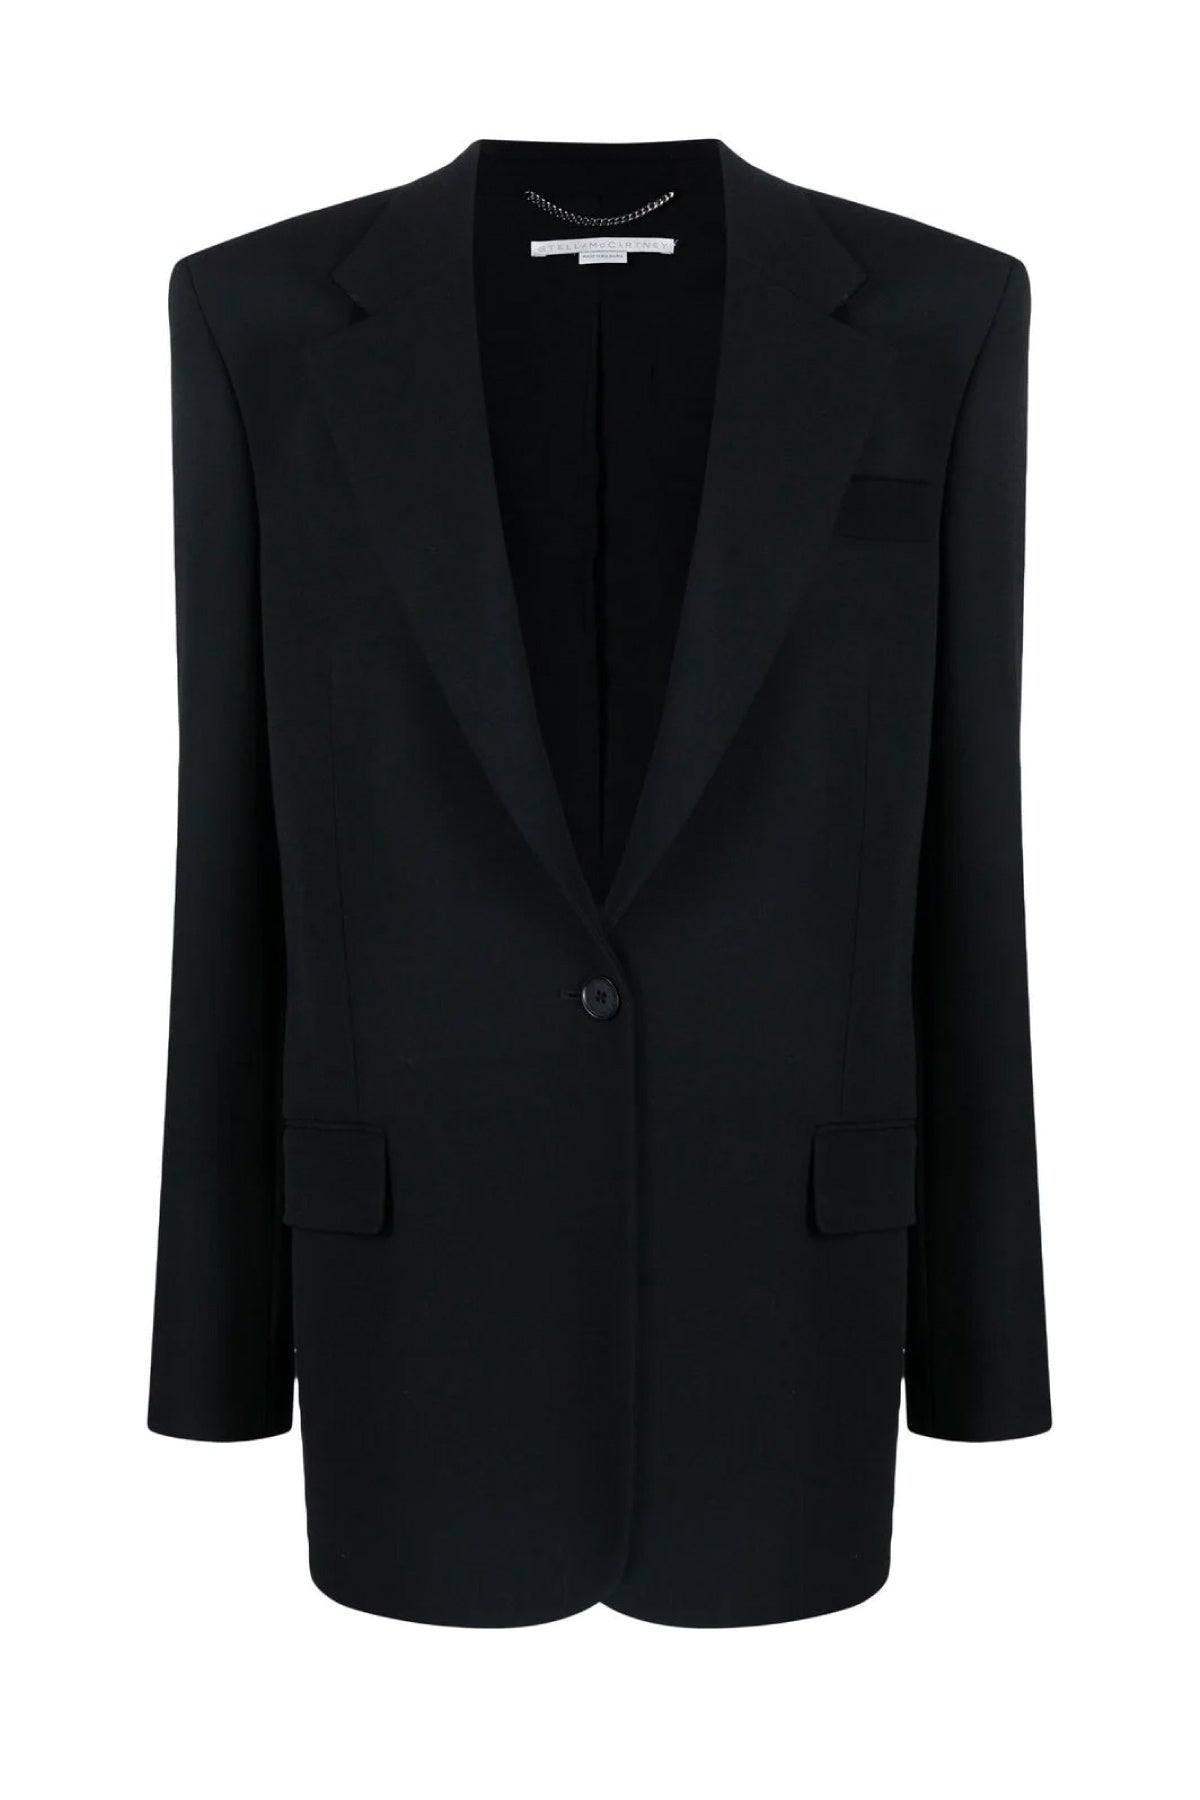 Stella McCartney Twill Tailoring Single Breasted Blazer - Black